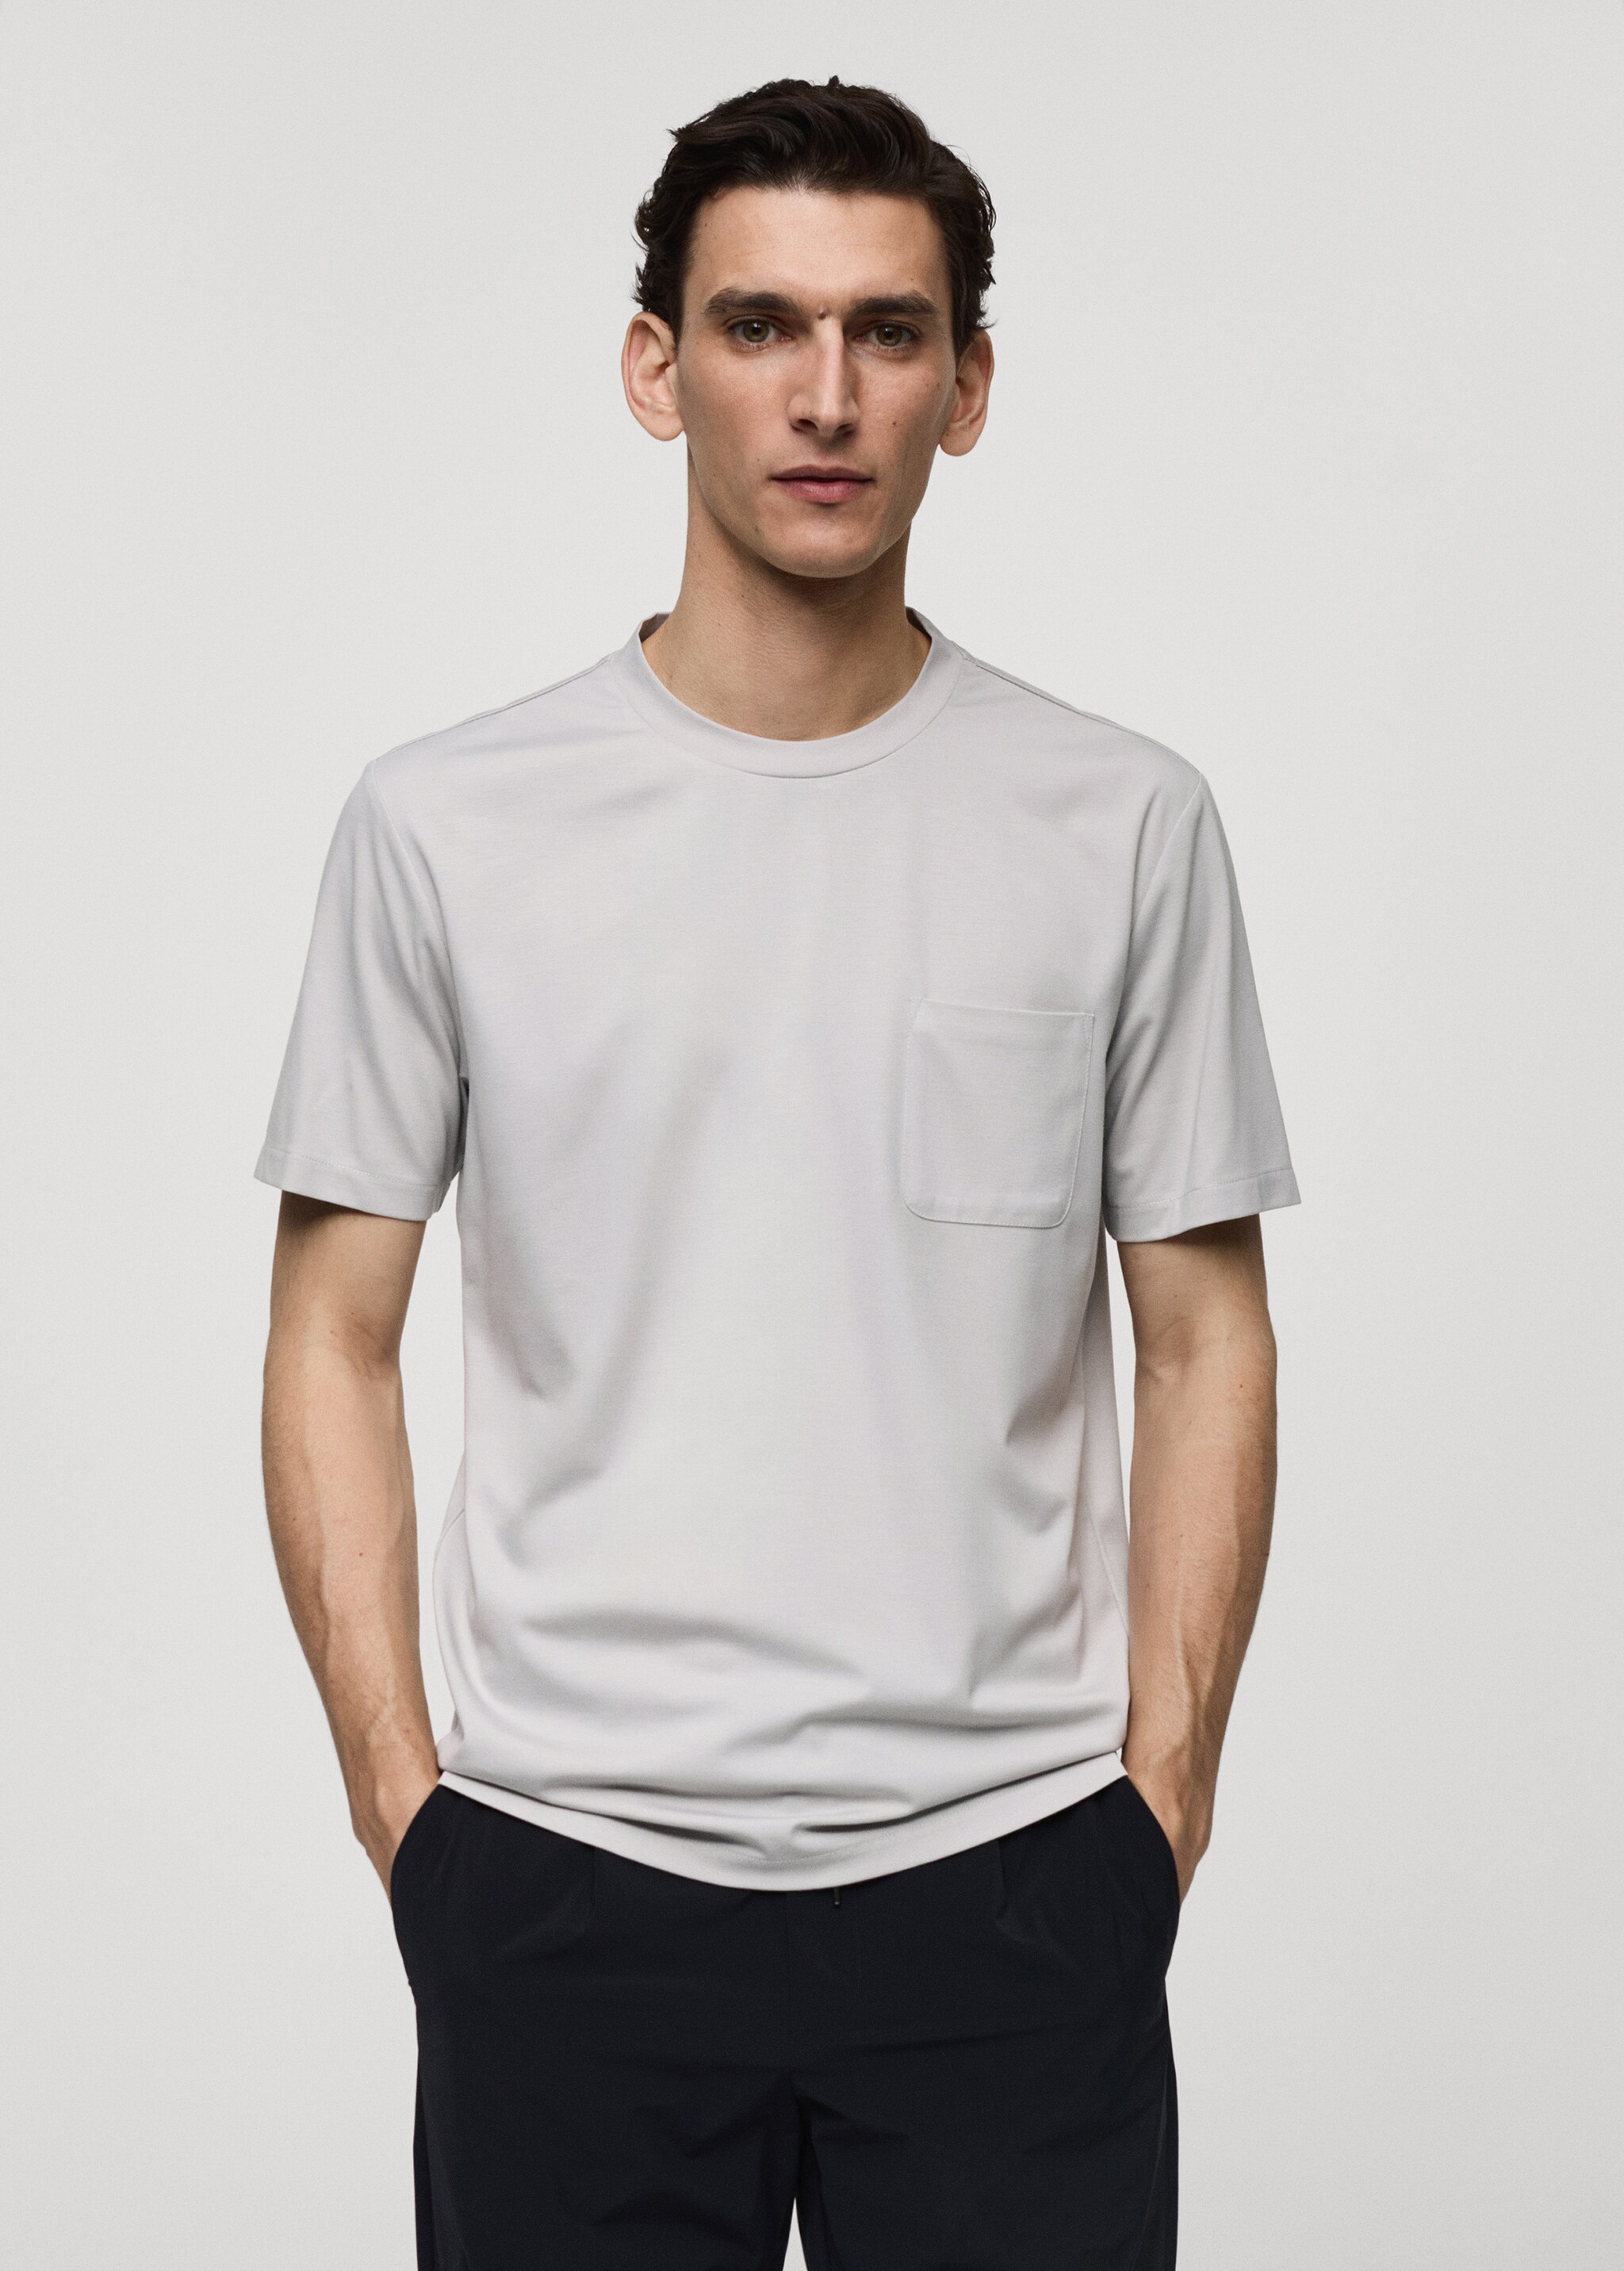 Slim fit t-shirt with pocket - Medium plane